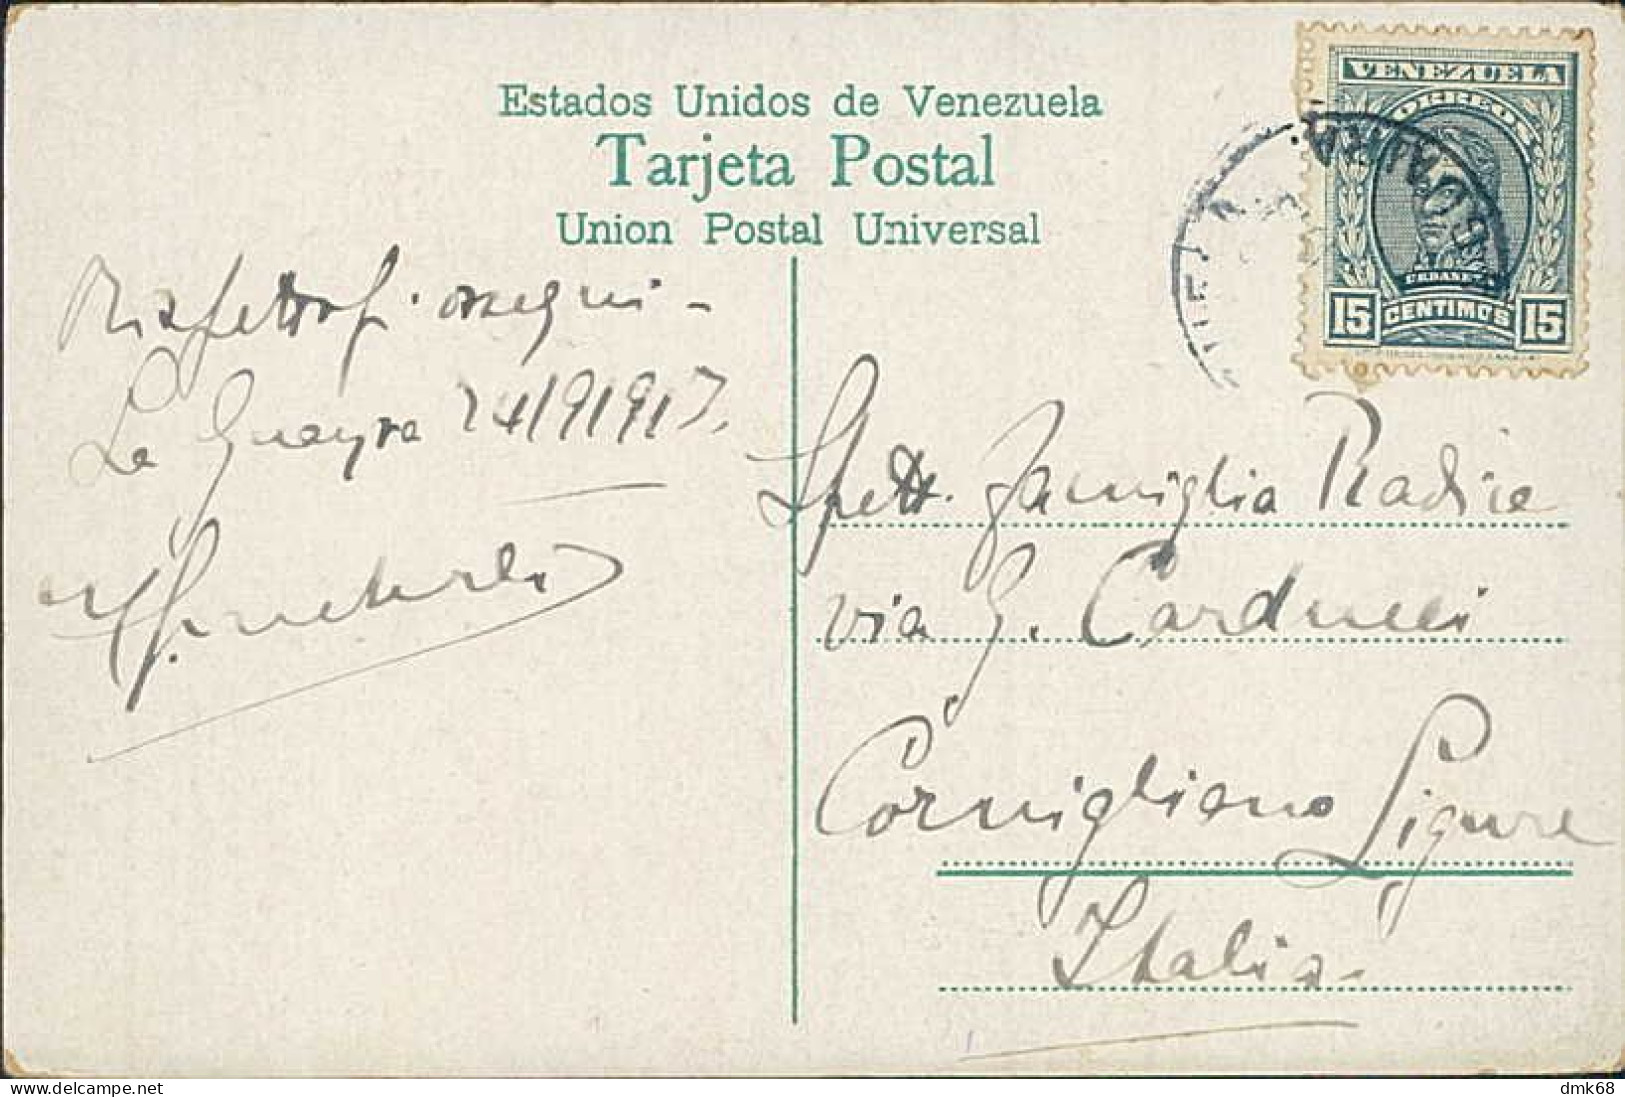 VENEZUELA - CARACAS - GATHMANN HNOS - PUERTO DE LA GUAIRA - MAILED TO ITALY - 1910s / STAMP (17791) - Venezuela